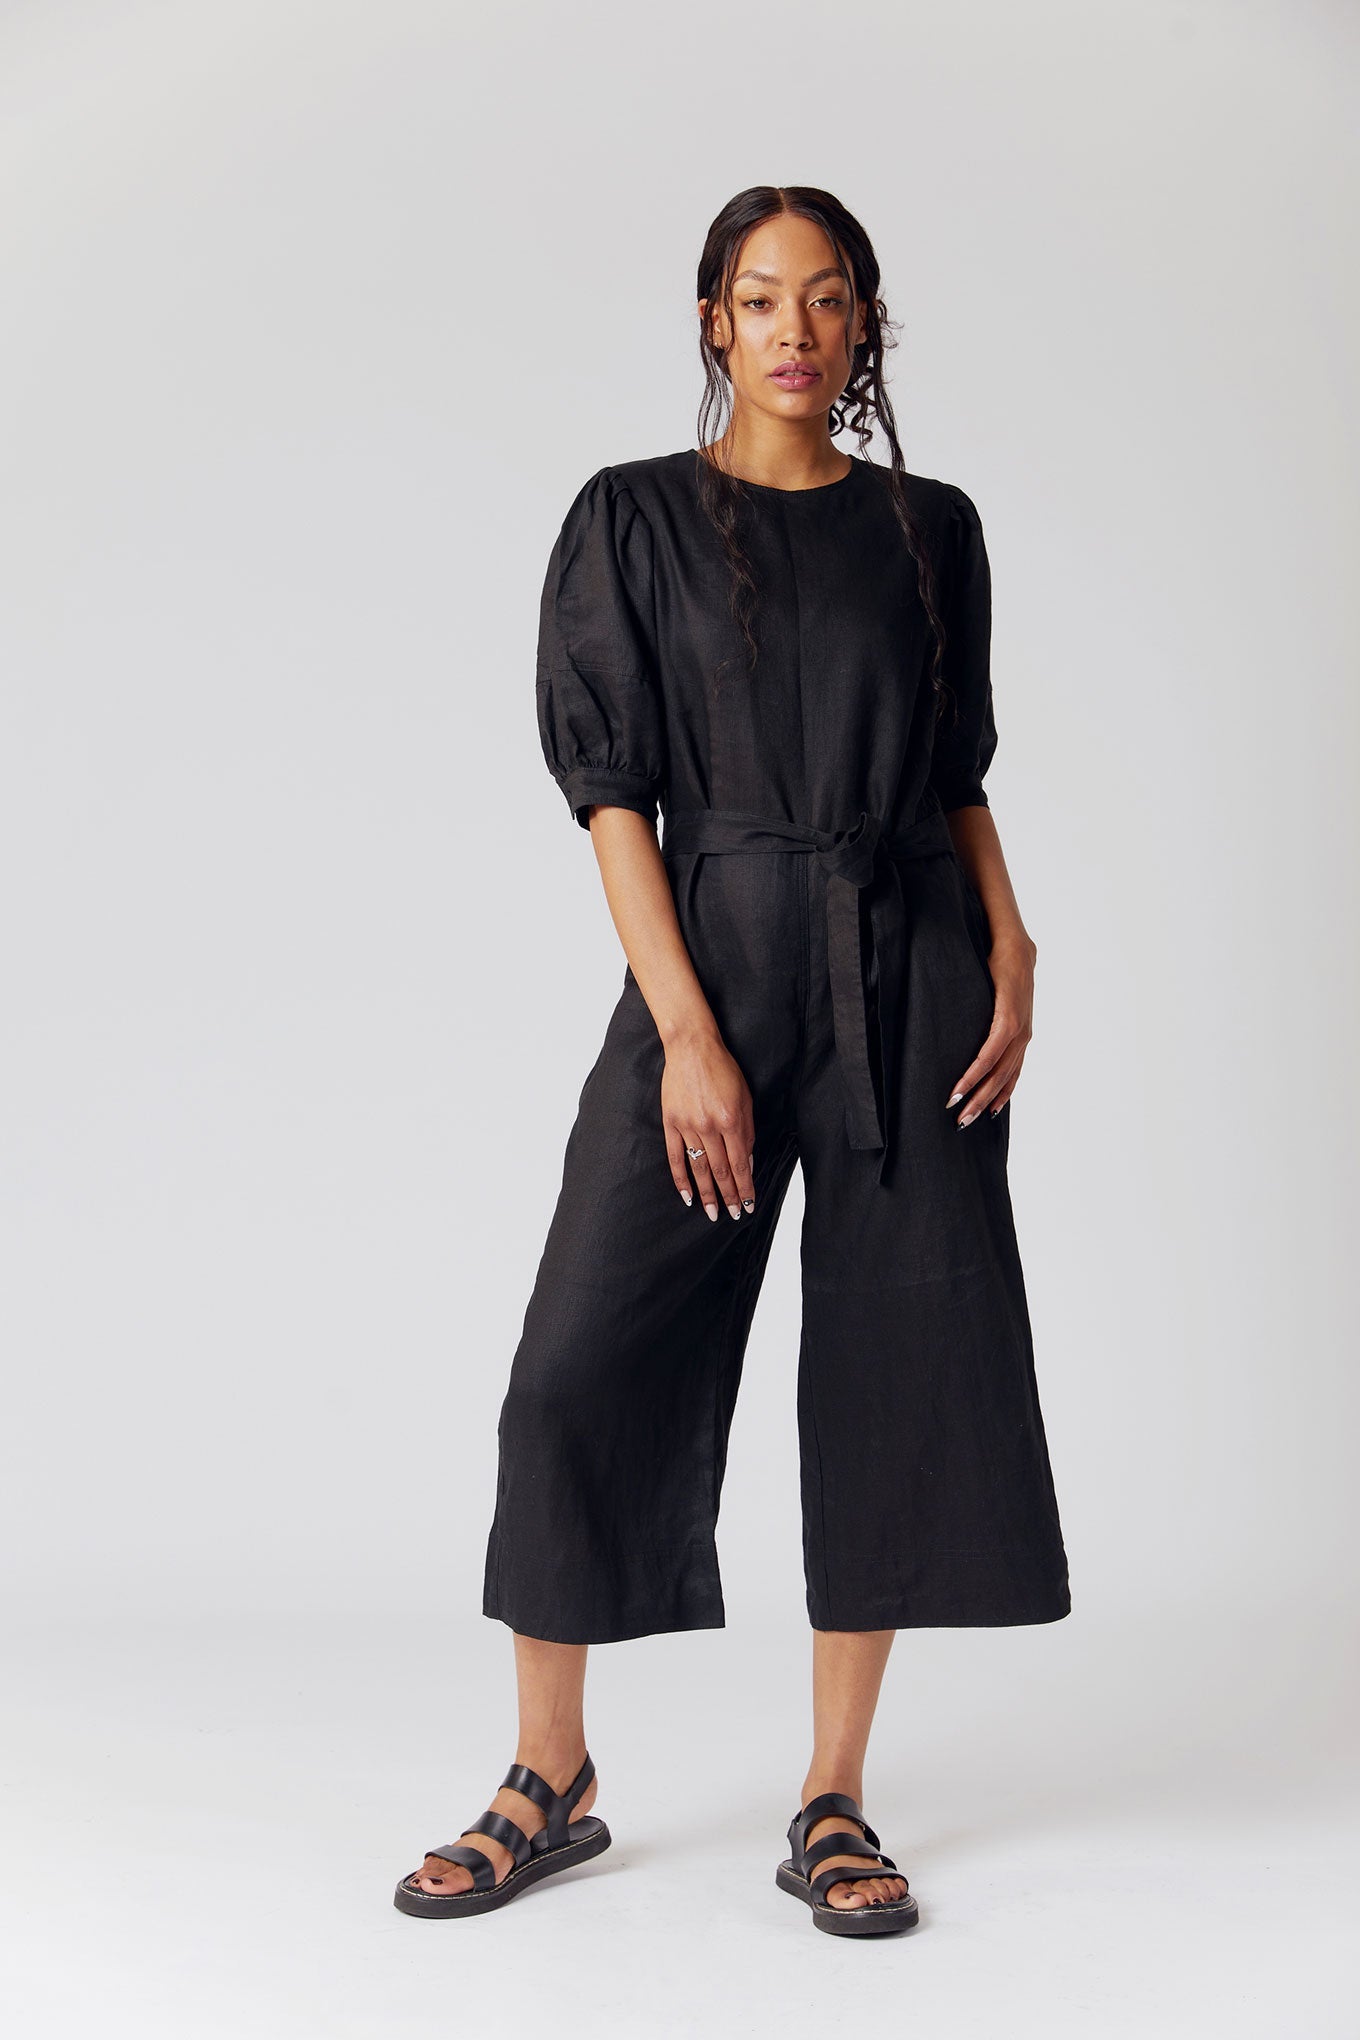 FAYE Organic Linen Jumpsuit Black, SIZE 5 / UK 16 / EUR 44